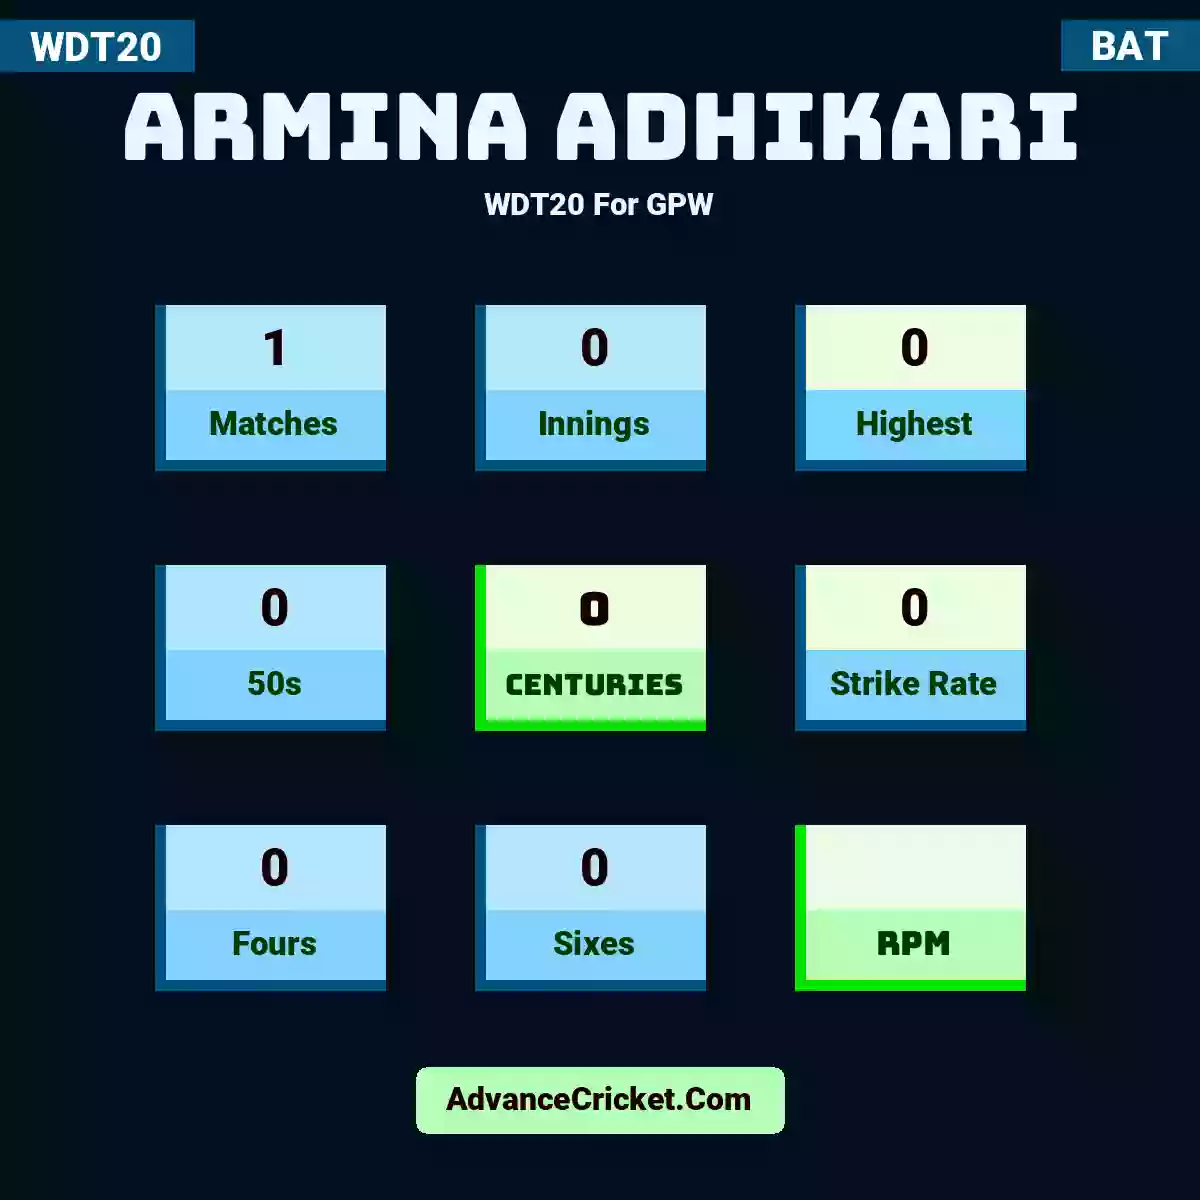 Armina Adhikari WDT20  For GPW, Armina Adhikari played 1 matches, scored 0 runs as highest, 0 half-centuries, and 0 centuries, with a strike rate of 0. A.Adhikari hit 0 fours and 0 sixes.